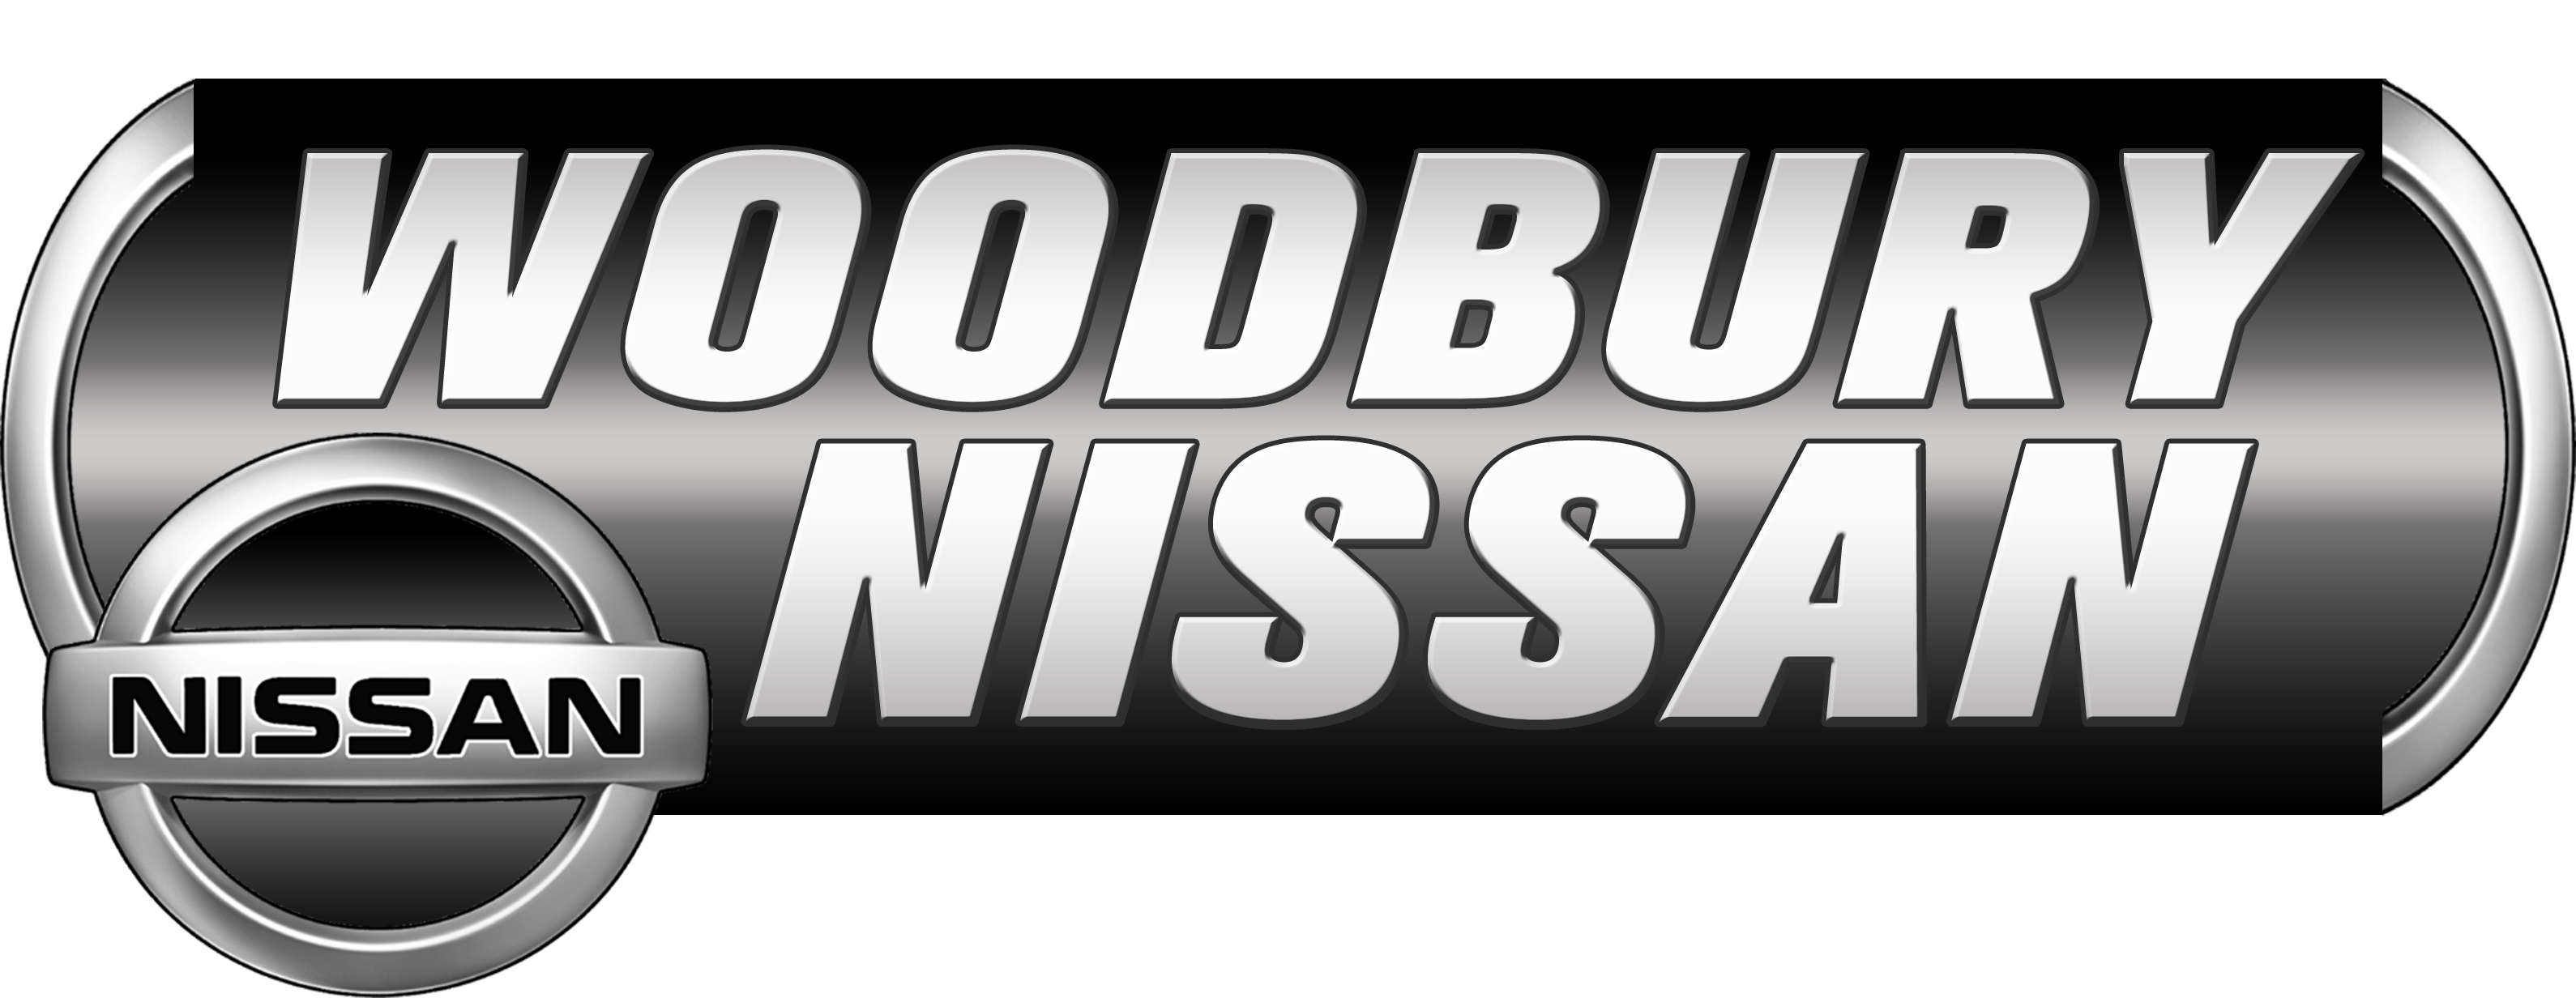 Nissan dealers woodbury nj #1